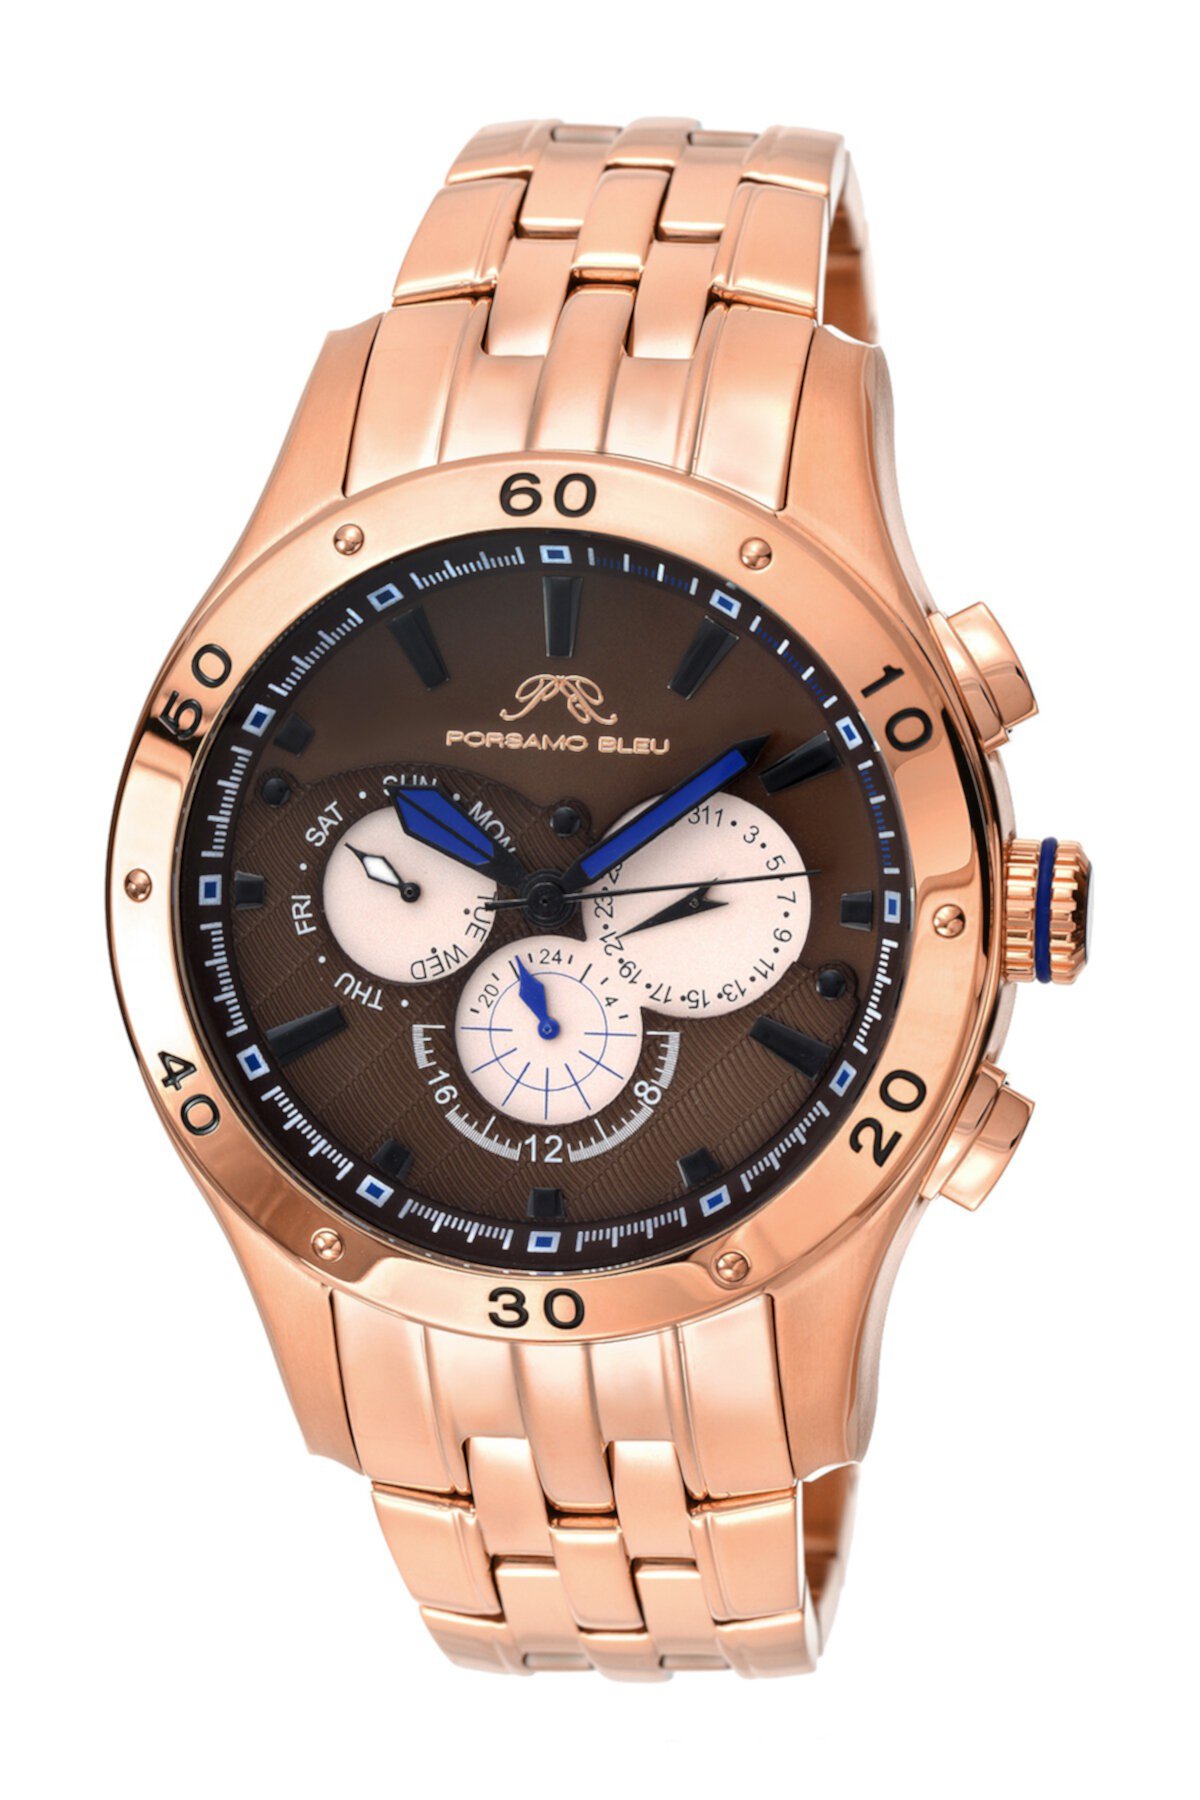 Мужские часы Andre Swiss Quartz Porsamo Bleu